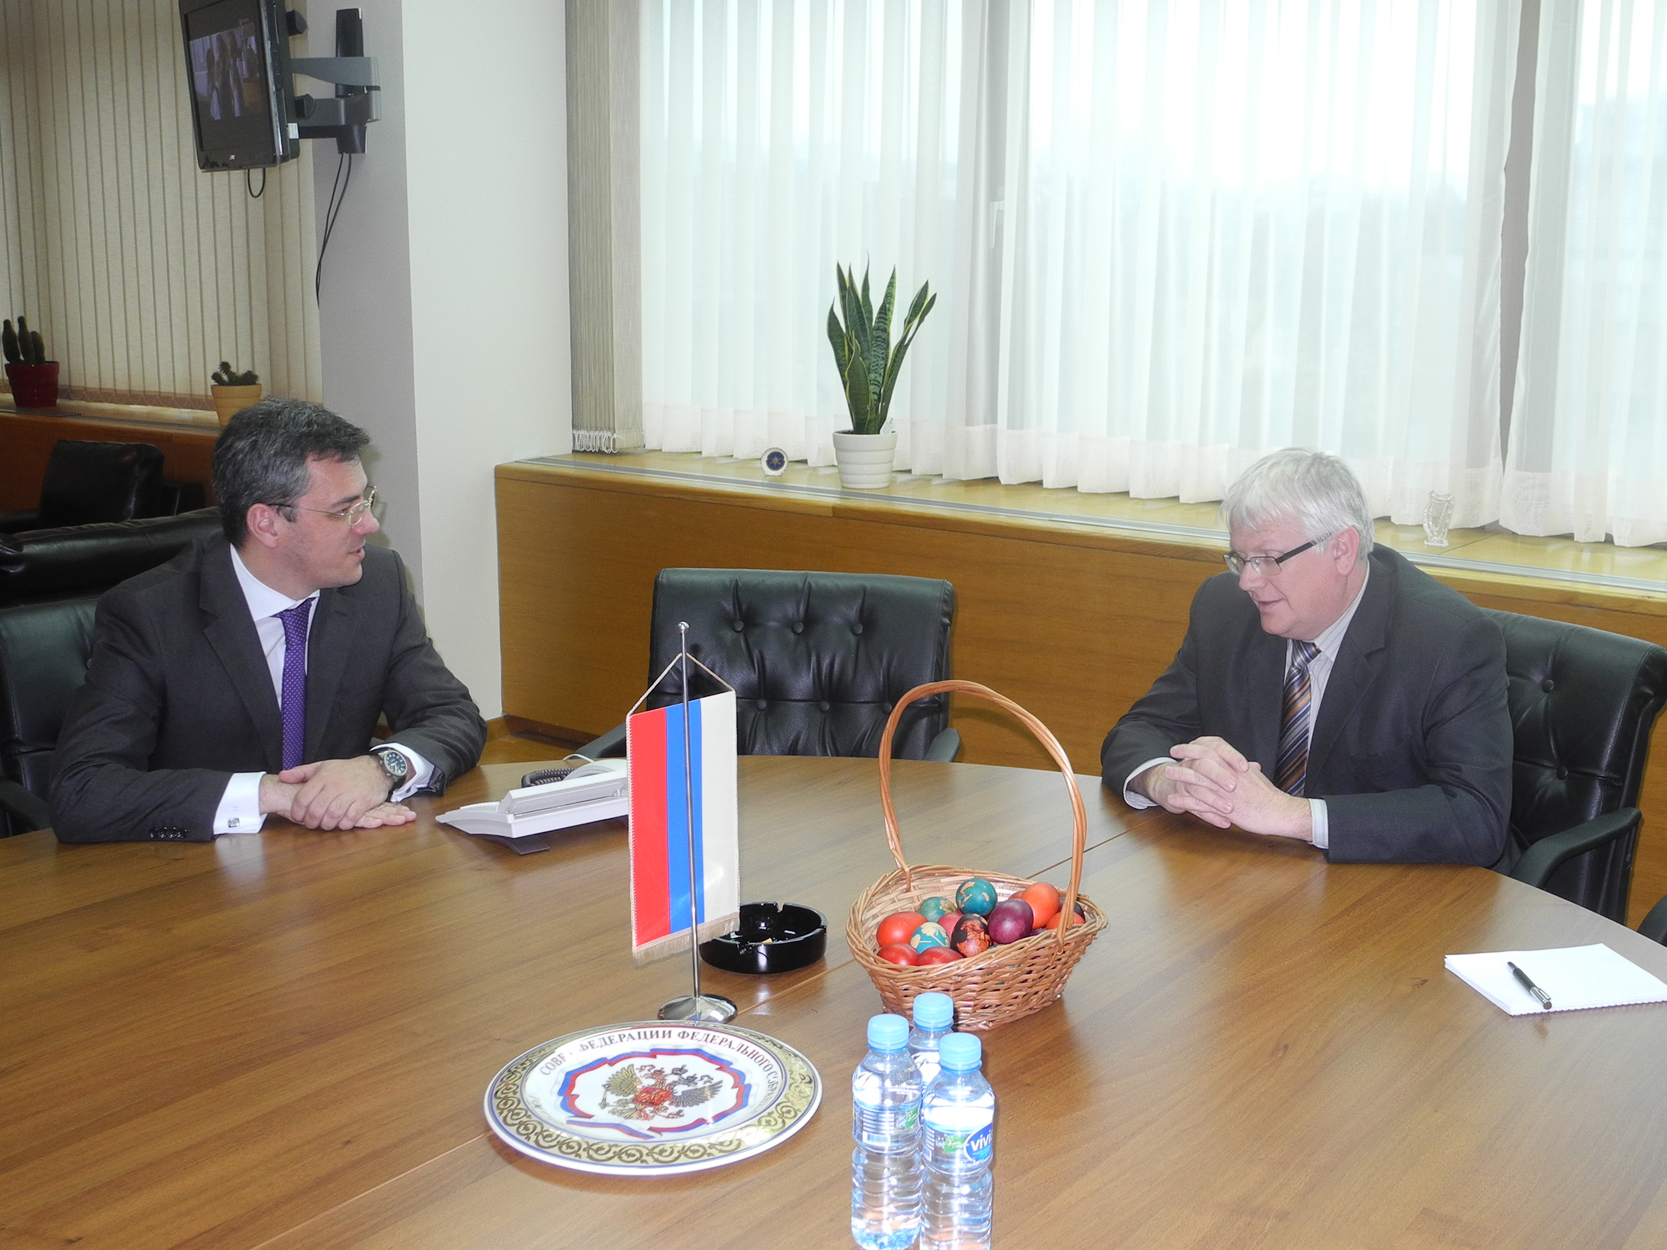 The Deputy Speaker of the House of Peoples of the Parliamentary Assembly of Bosnia and Herzegovina Ognjen Tadić spoke with the Ambassador of Hungary, József Pandur